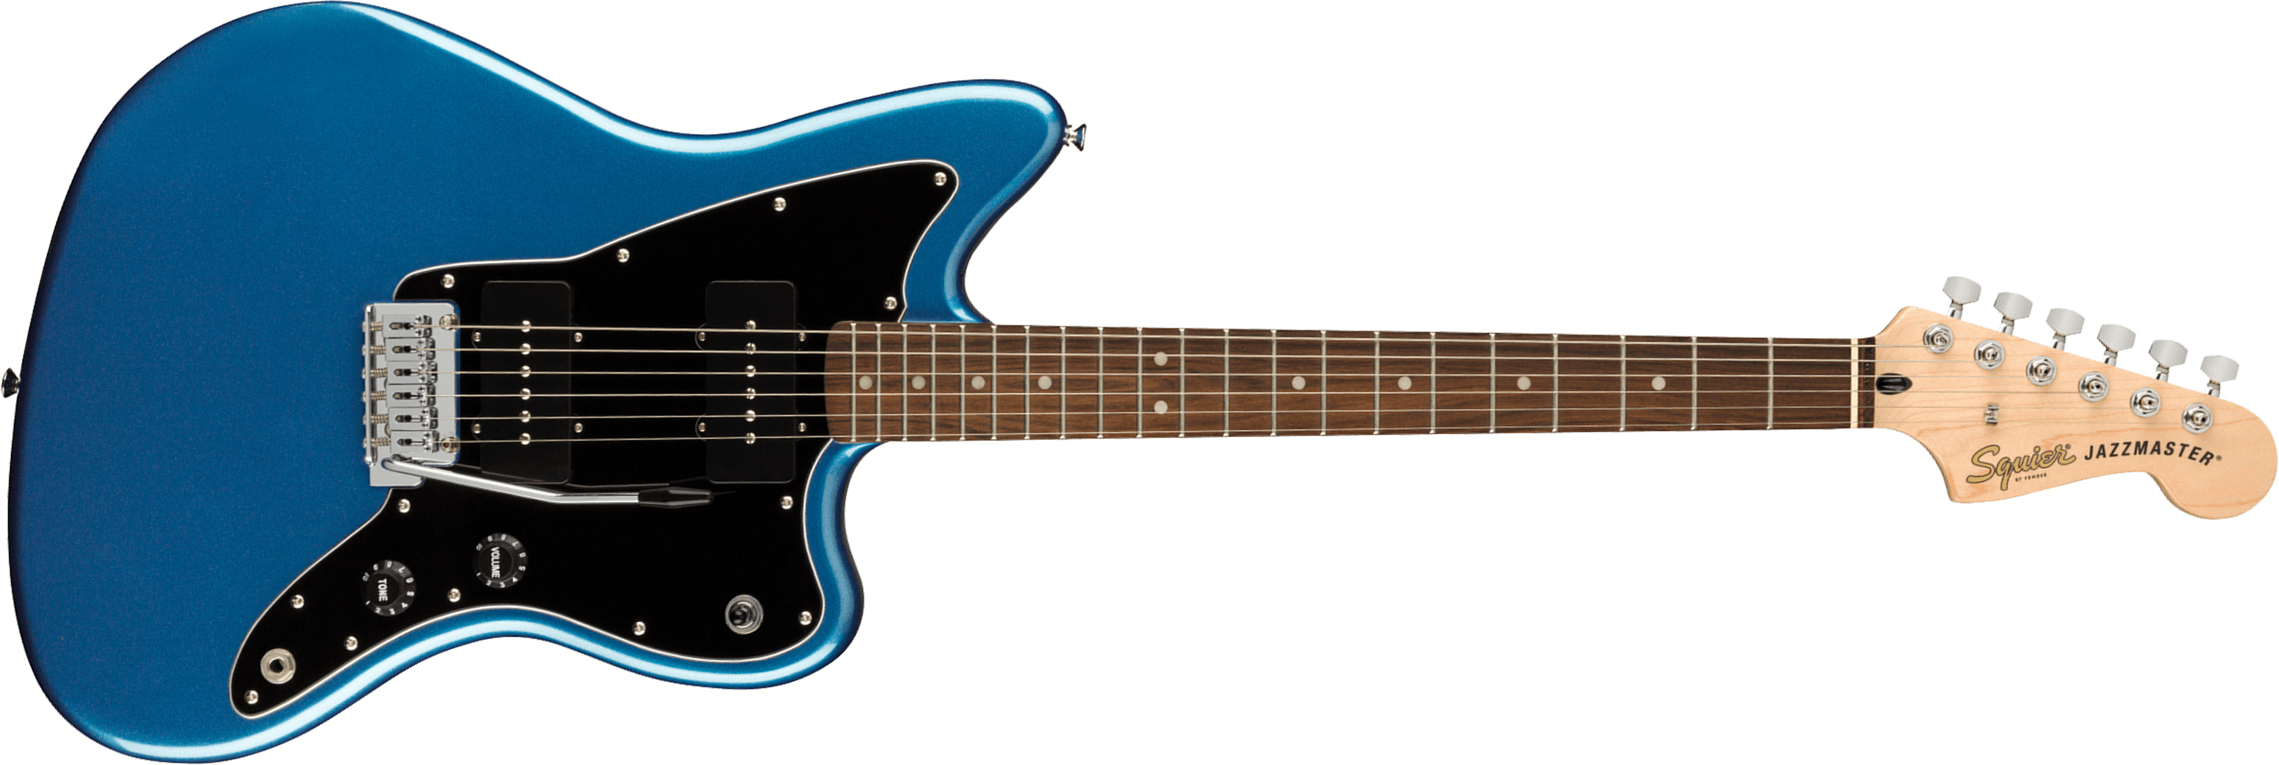 Squier Jazzmaster Affinity 2021 2s Trem Lau - Lake Placid Blue - Retro rock electric guitar - Main picture